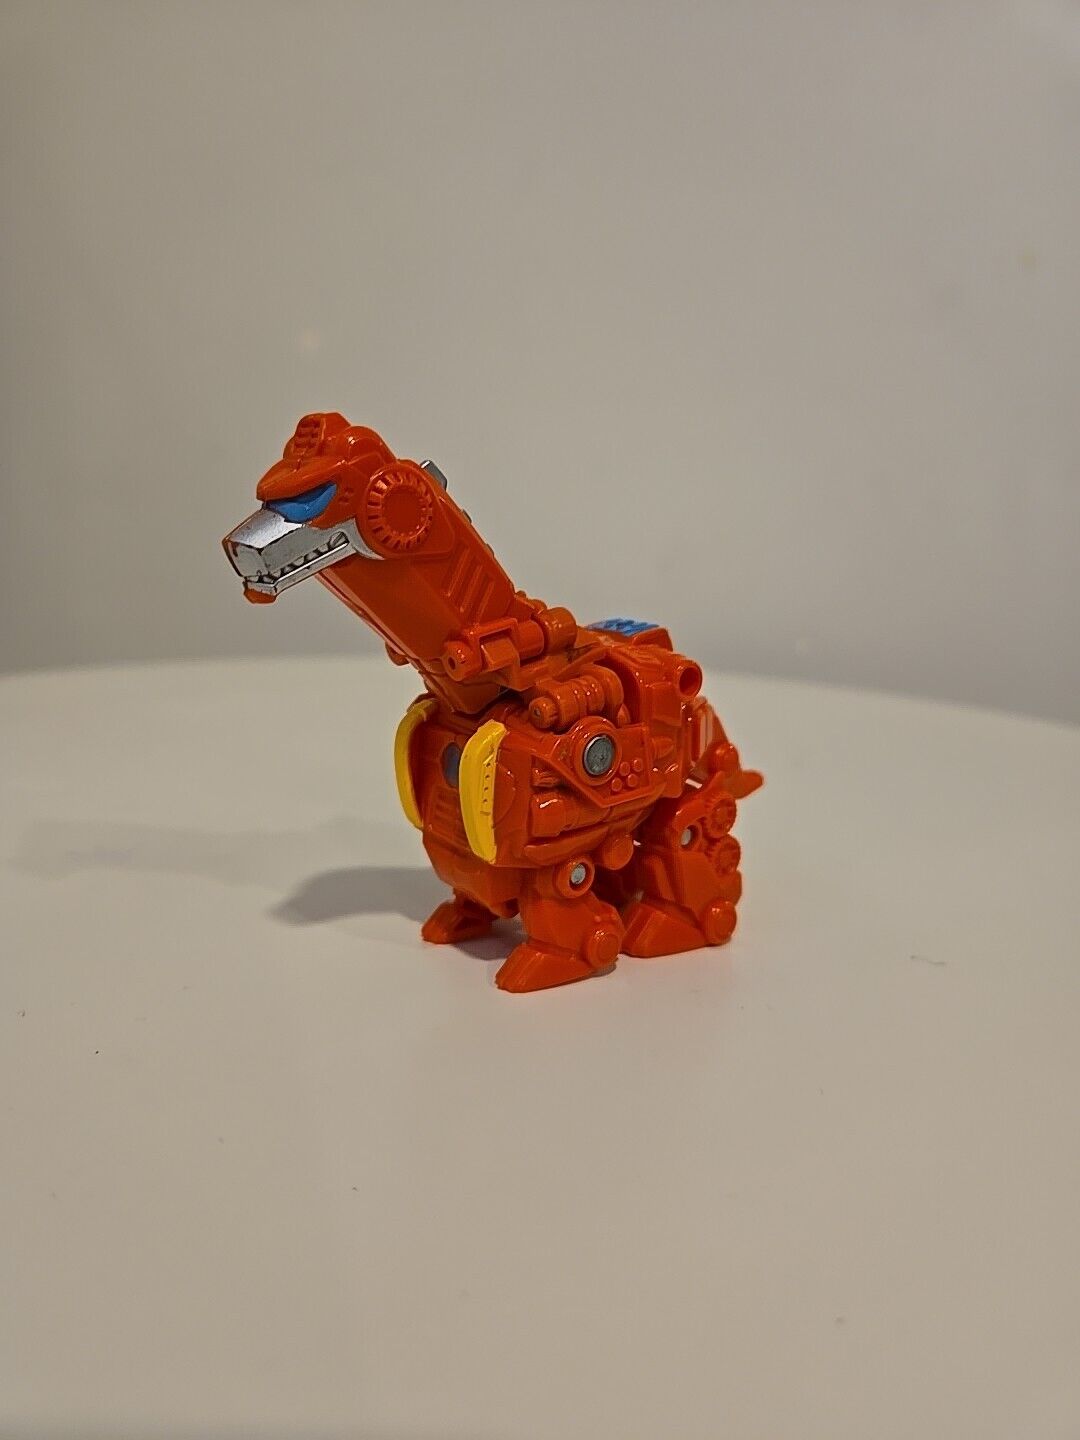 Transformers Playskool Rescue Bots Heatwave Dinobot Mini